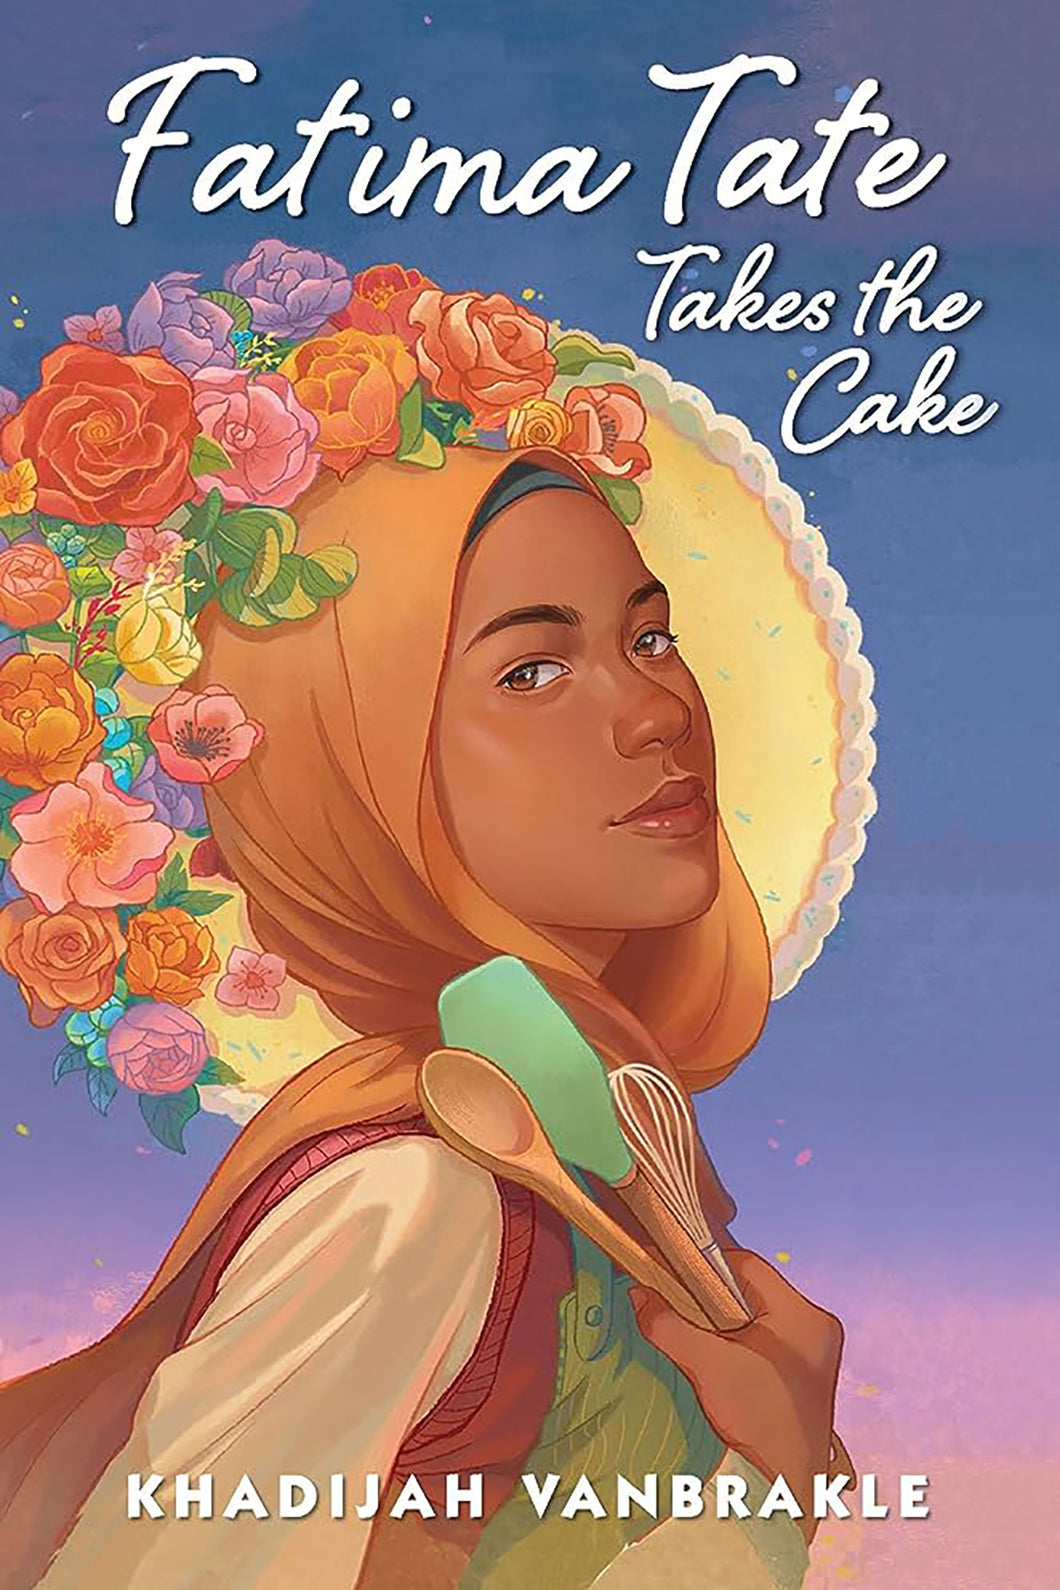 Fatima Tate Takes the Cake by Khadijah Vanbrakle / Hardcover - NEW BOOK